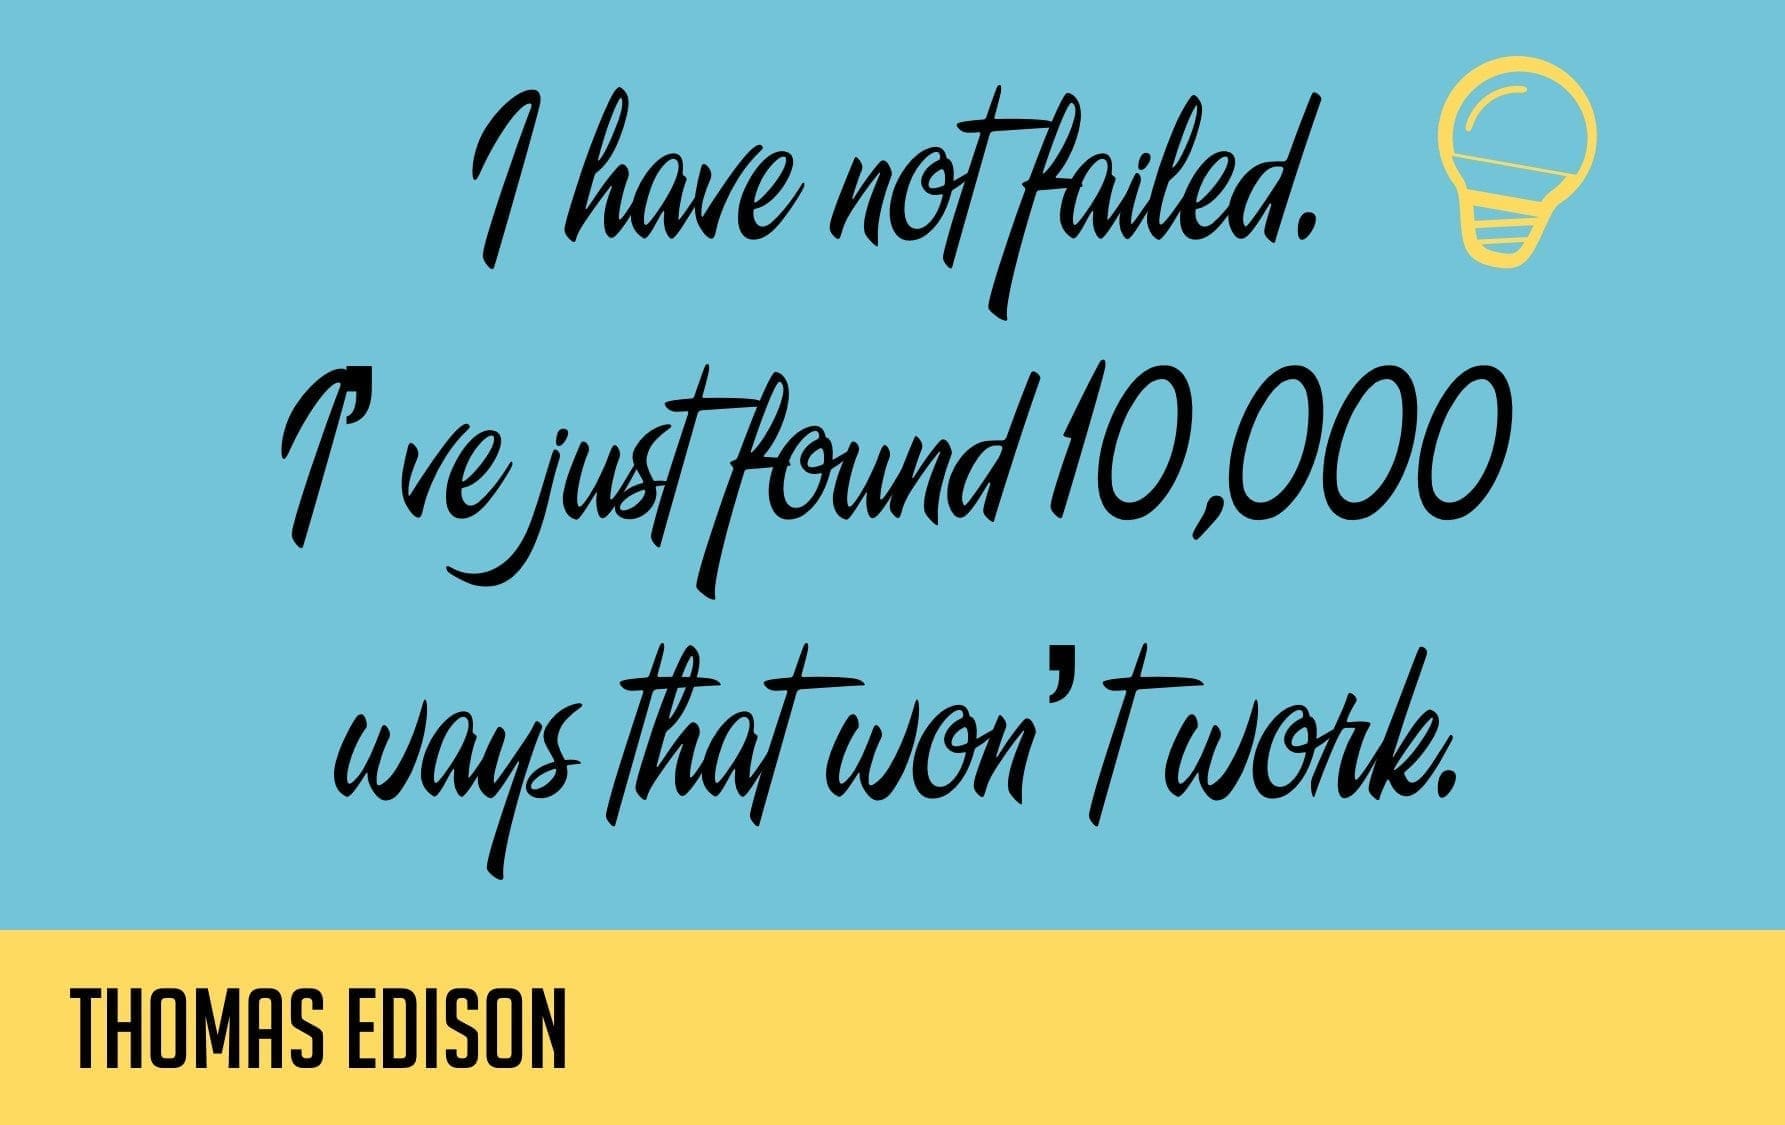 I have not failed. I've just found 10,000 ways that won't work. - Thomas Edison